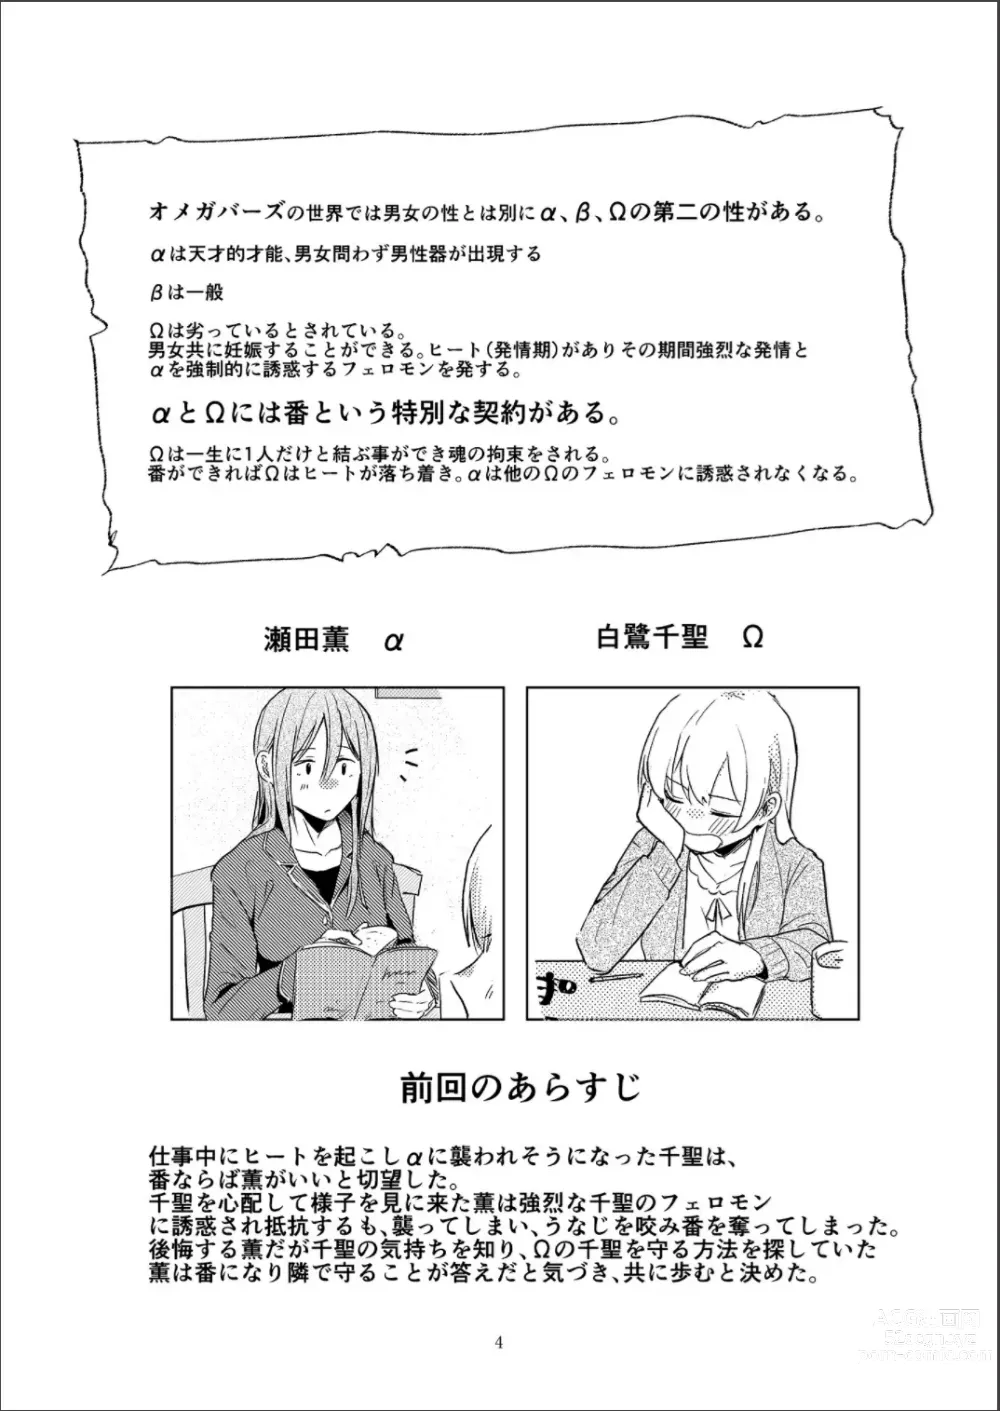 Page 4 of doujinshi retry